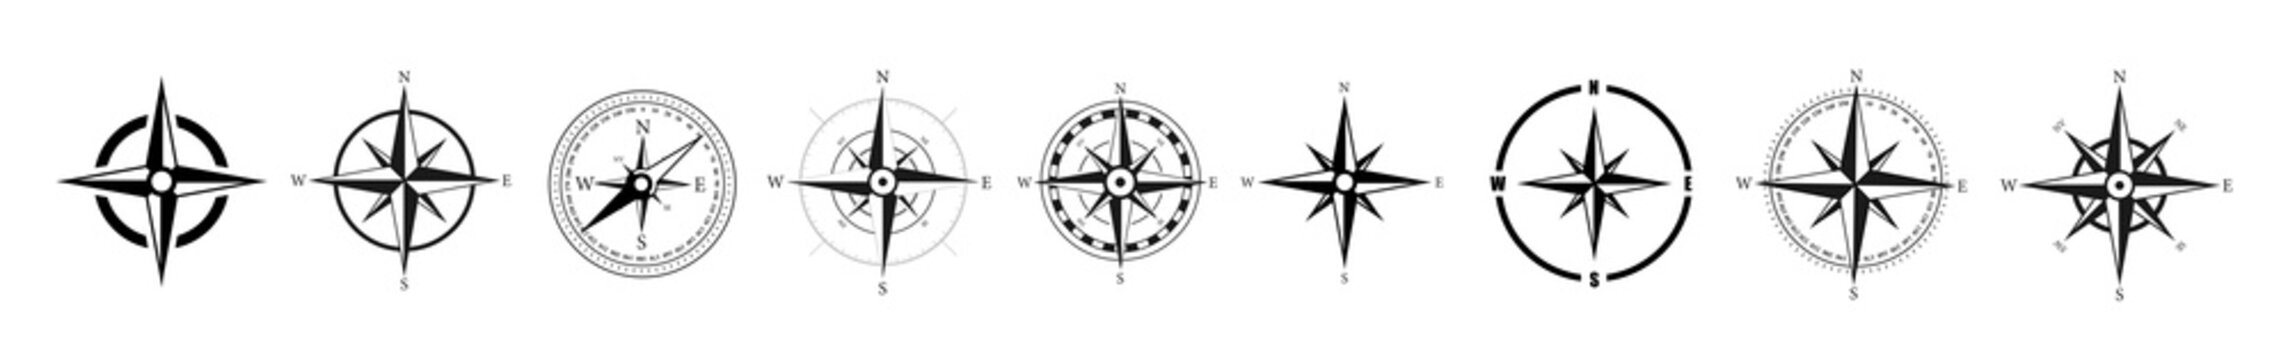 Black wind rose or compass set. Vector